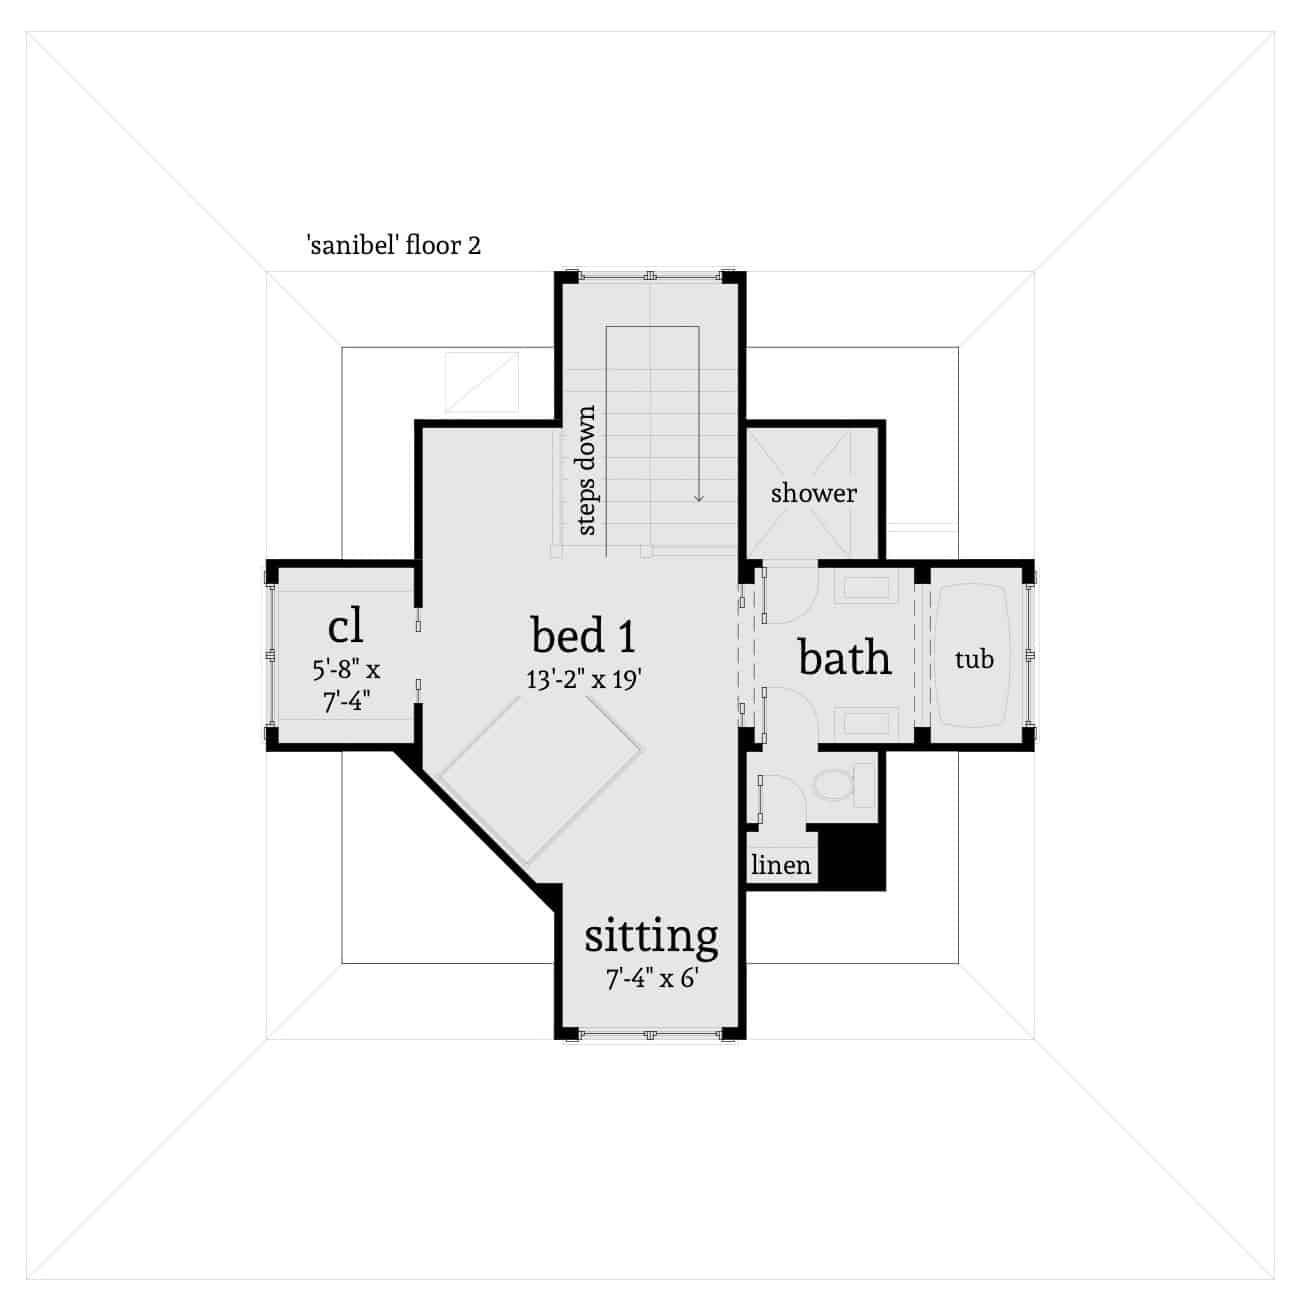 Floor 2 - Sanibel House Plan by Tyree House Plans